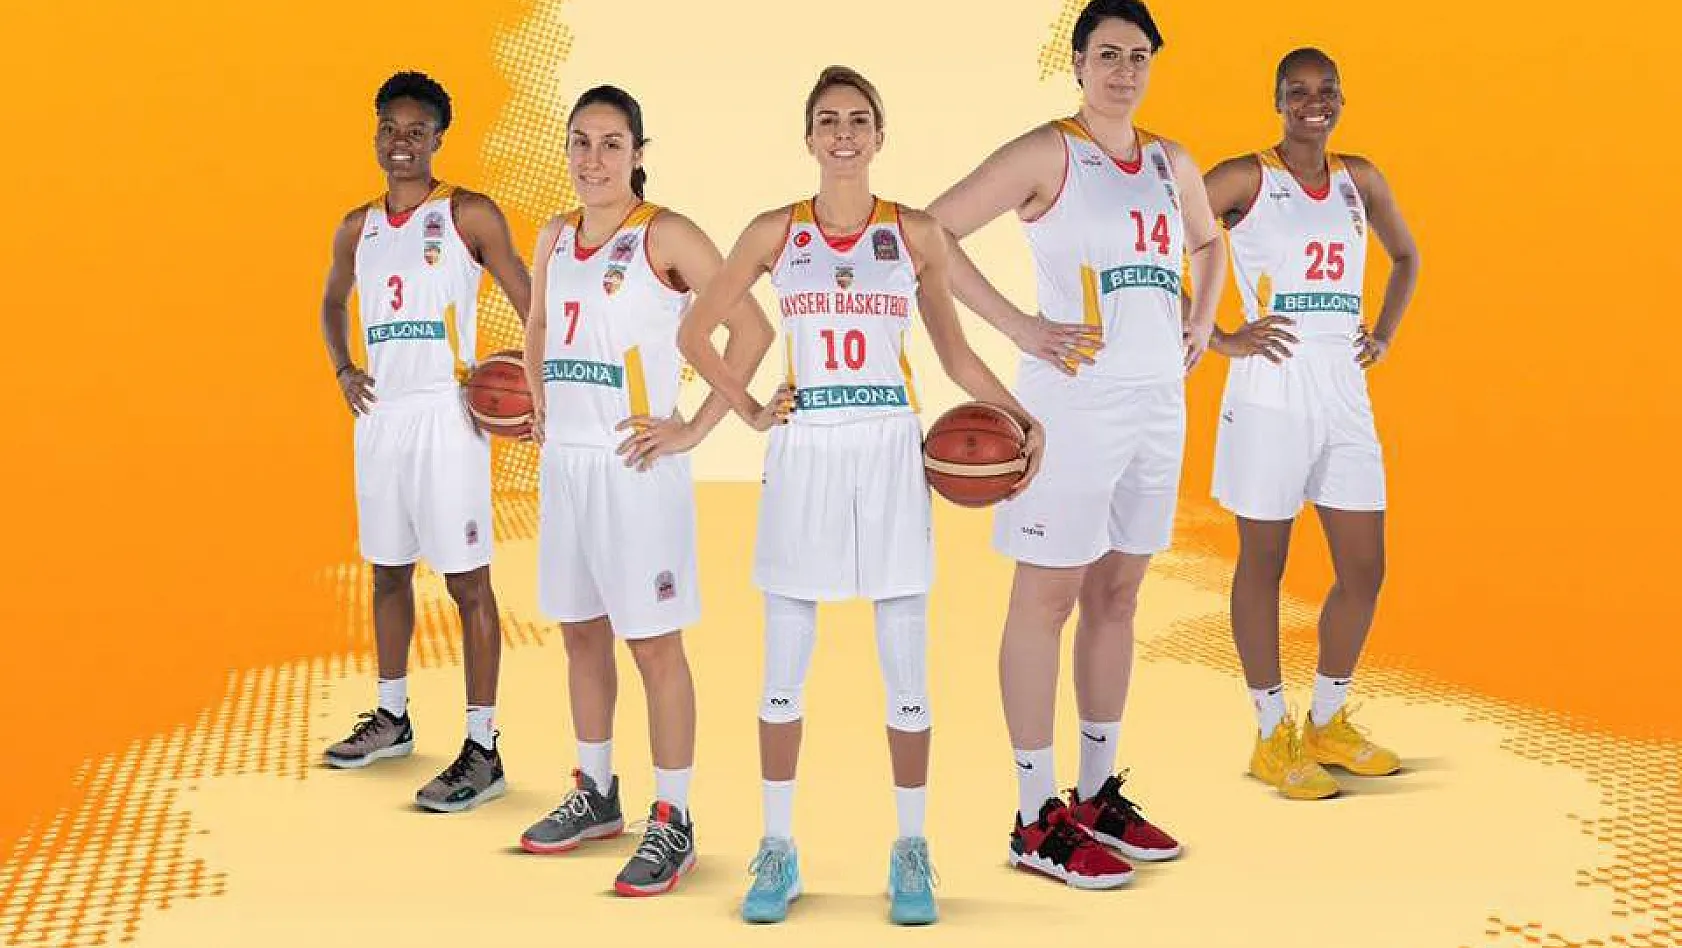 Bellona Kayseri Basketbol'da oyuncular tepkili